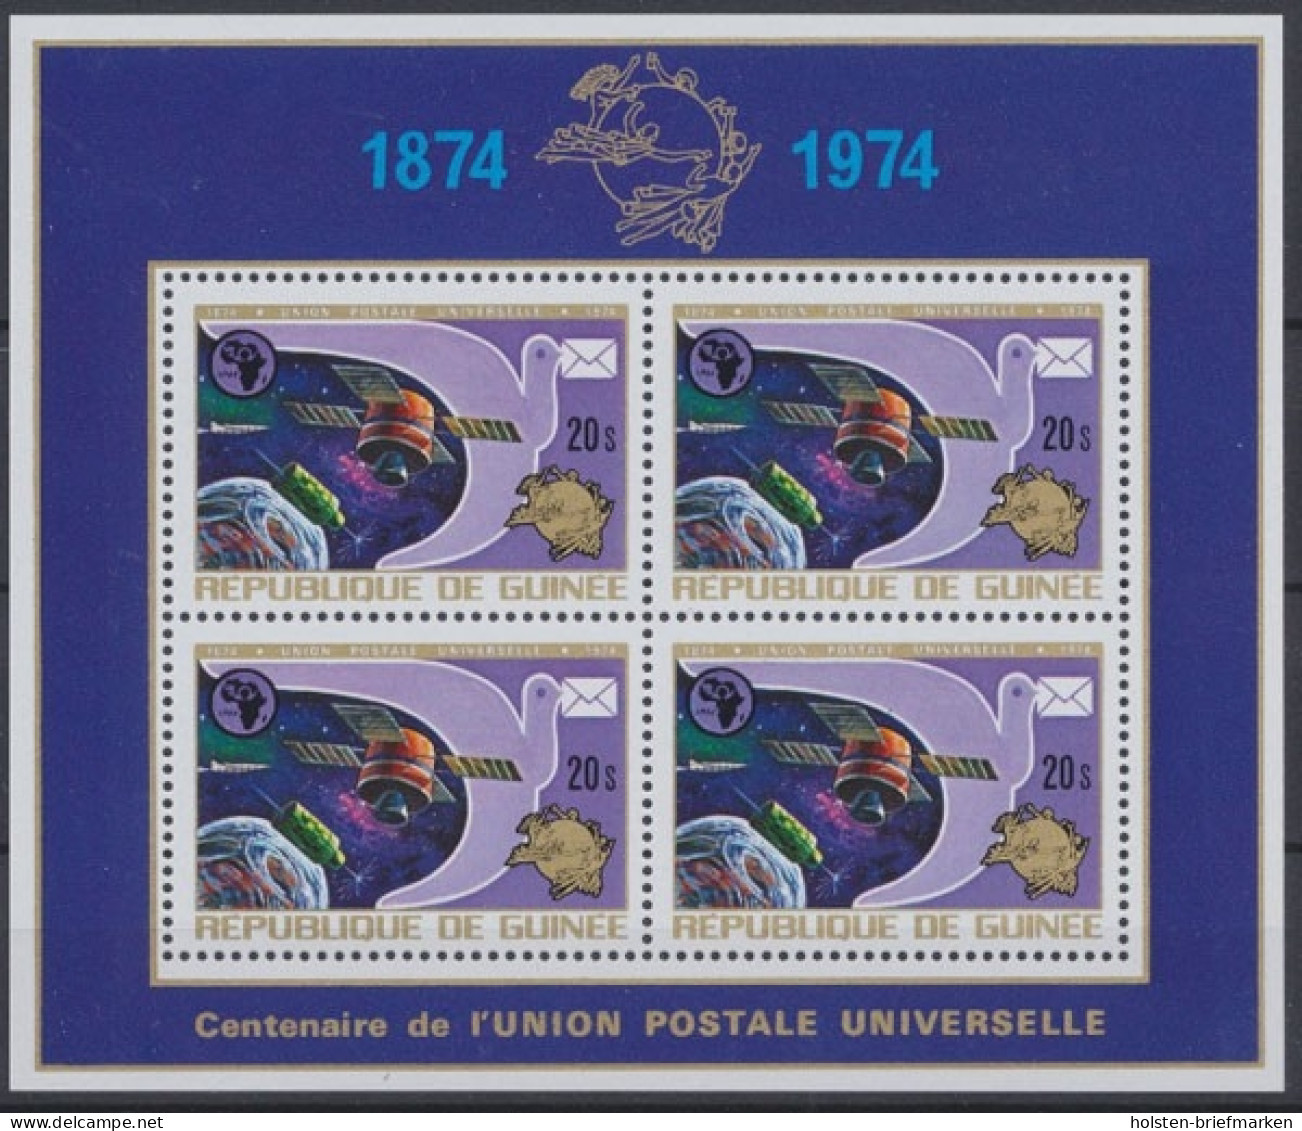 Guinea, Michel Nr. Block 36 A, Postfrisch - República De Guinea (1958-...)